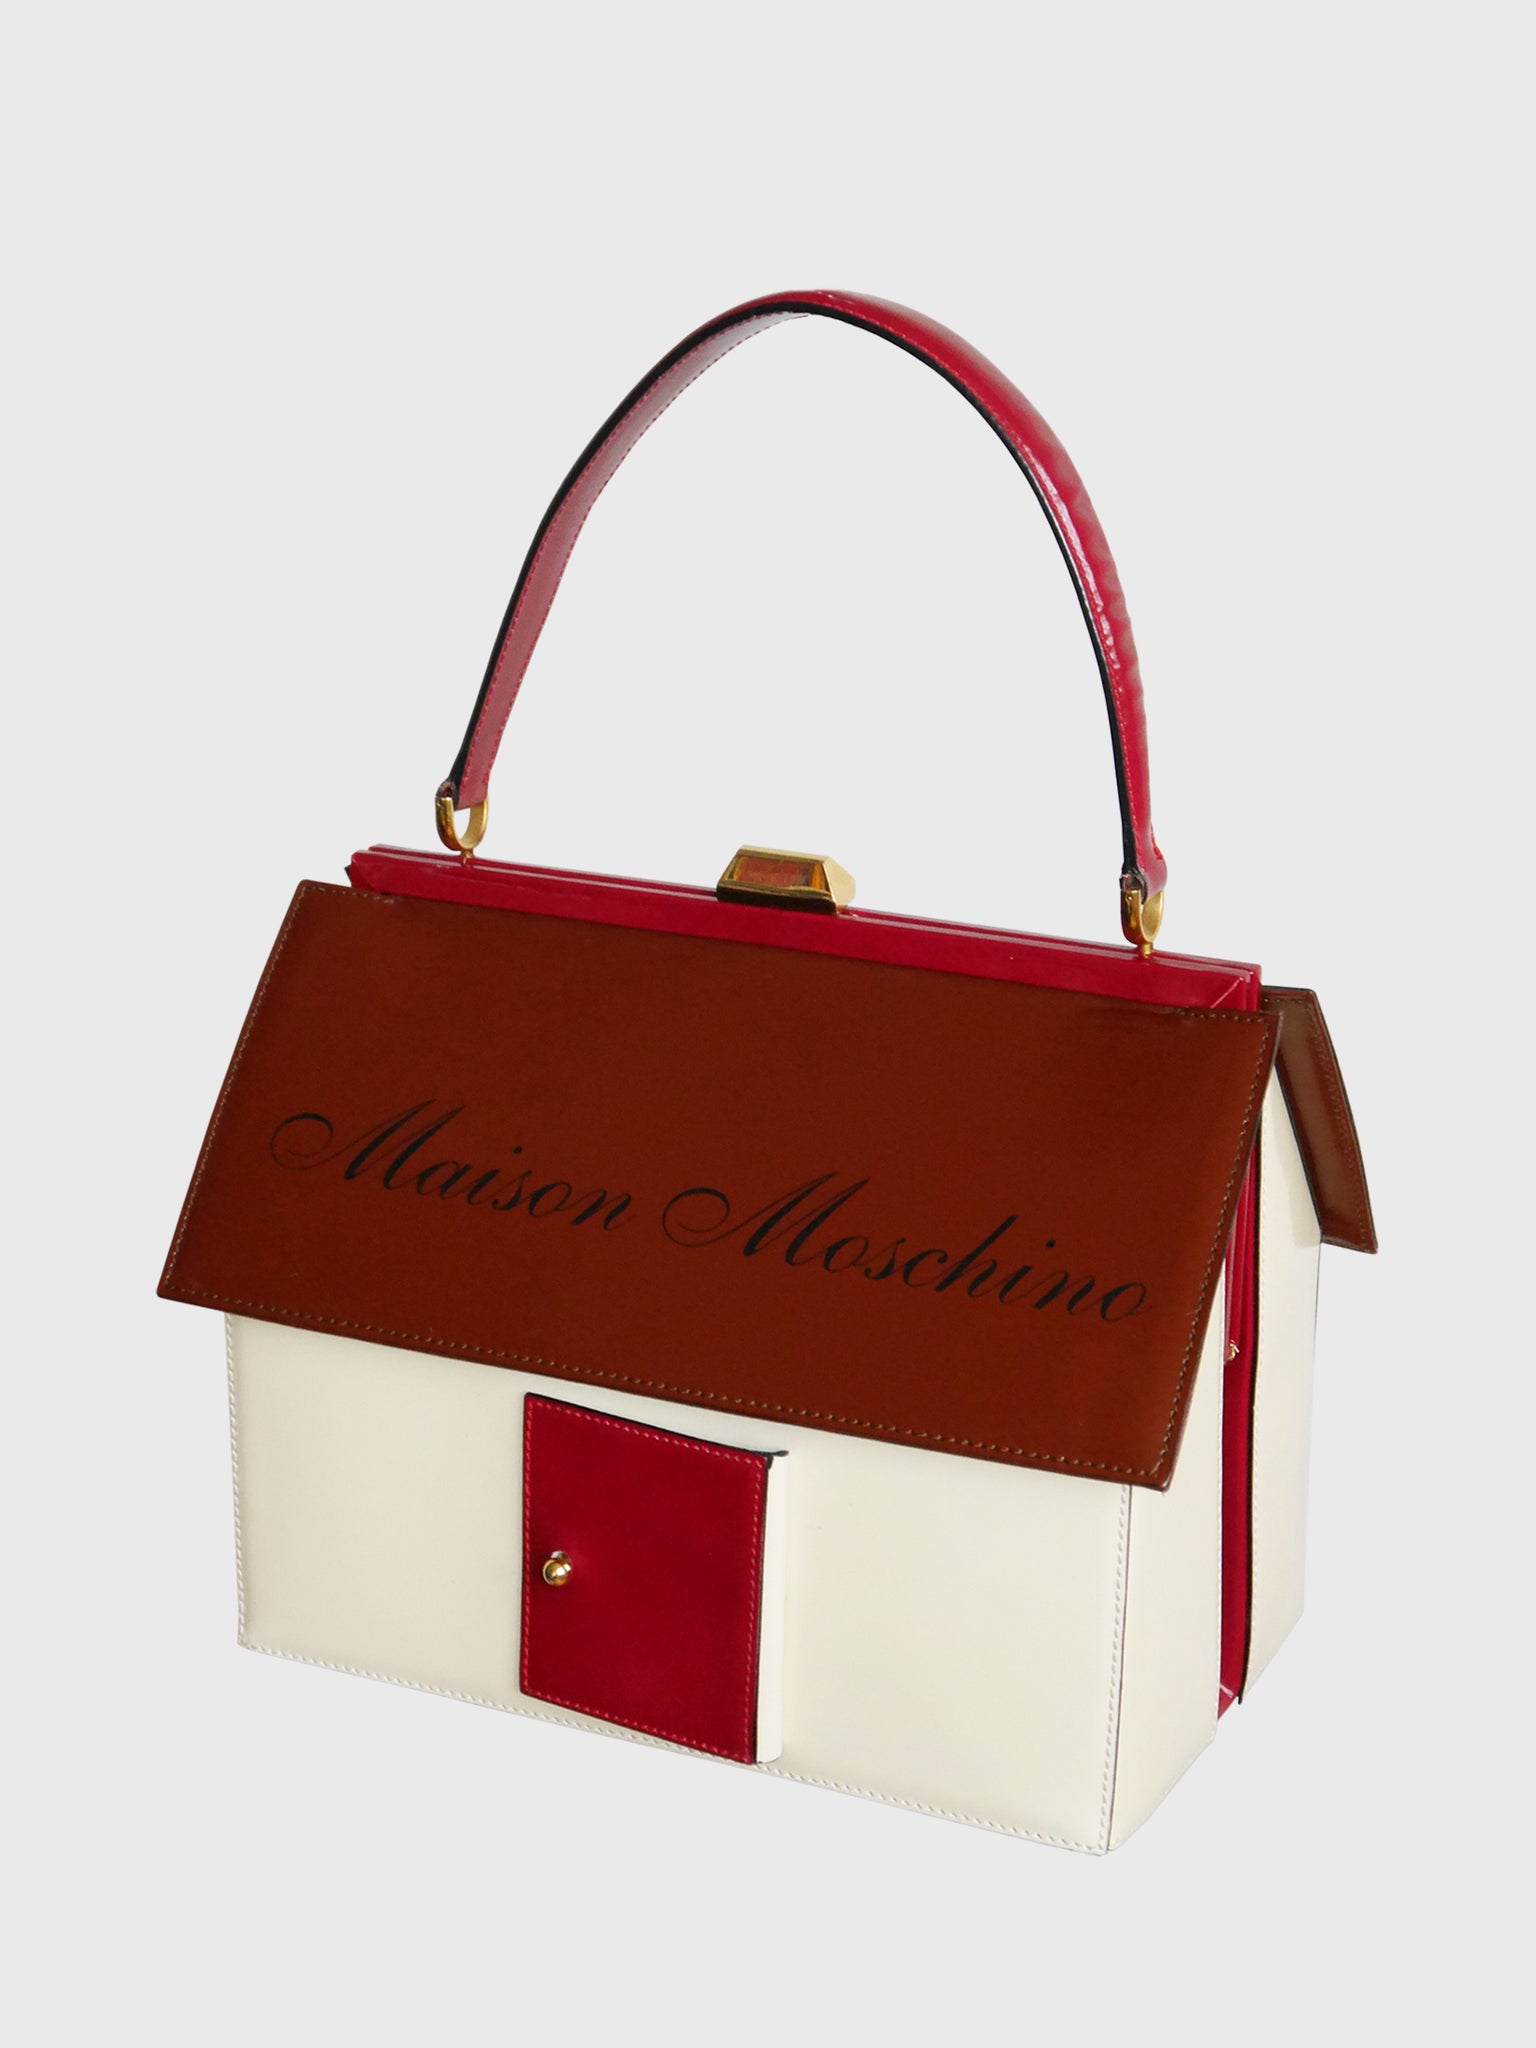 MOSCHINO 1990s Vintage "Maison Moschino" House-Shaped Novelty Handbag